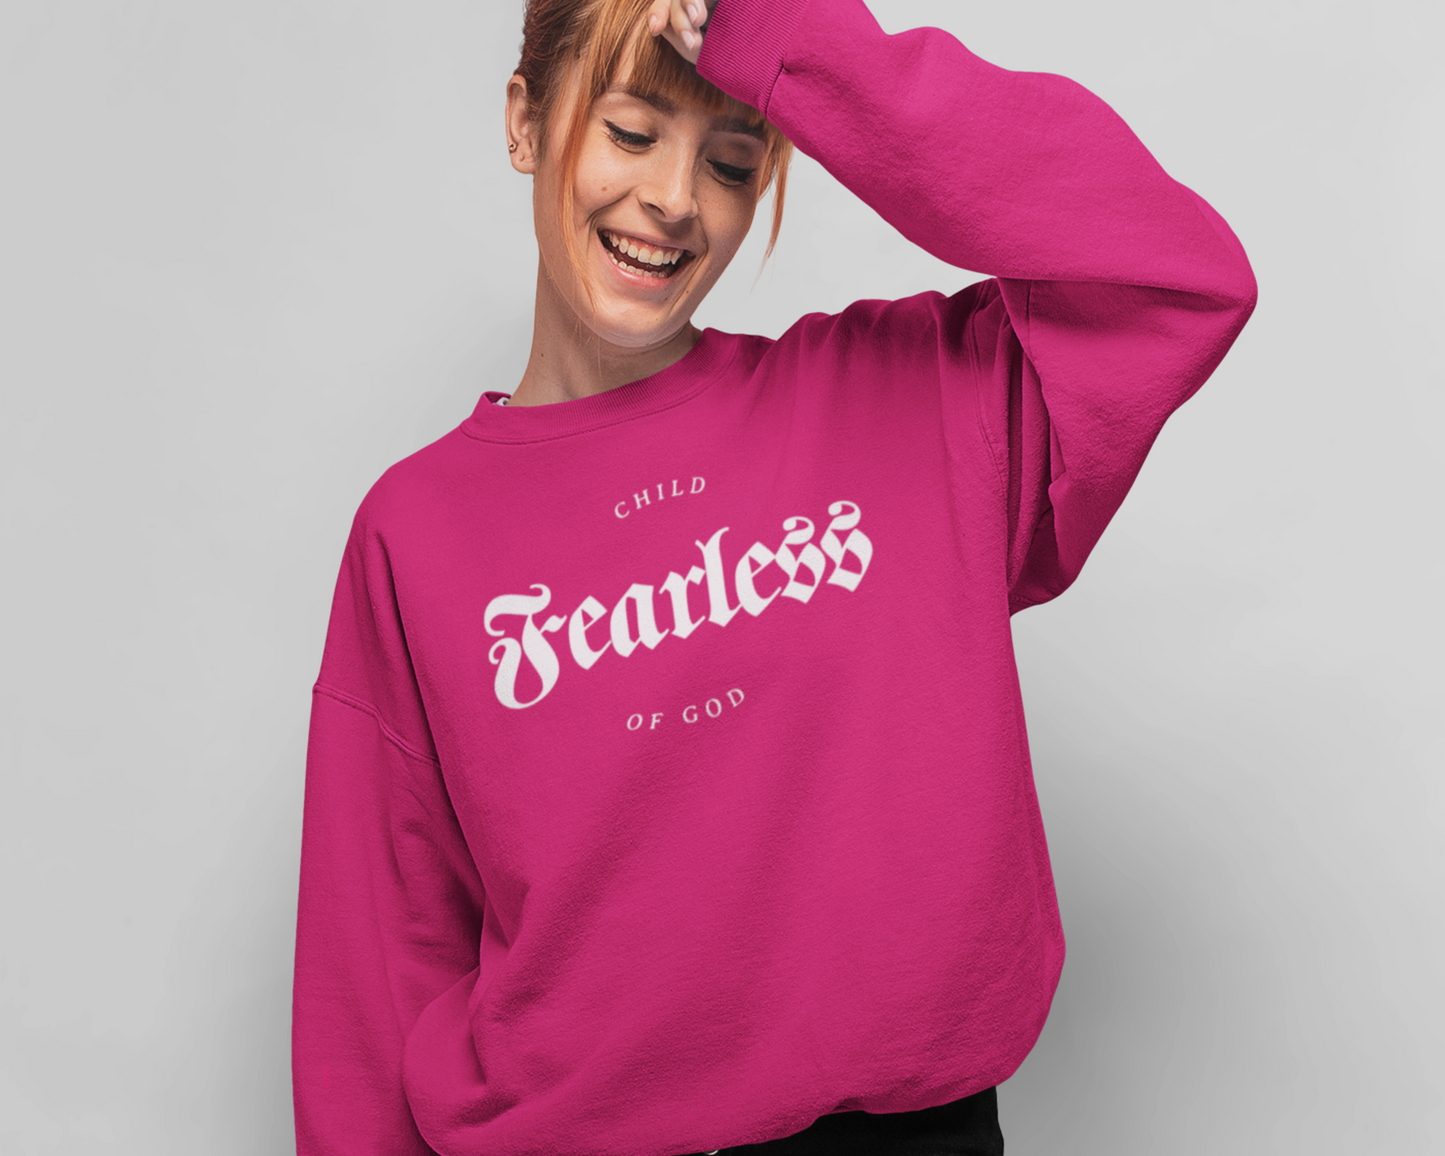 Fearless child of God Womens Sweatshirt